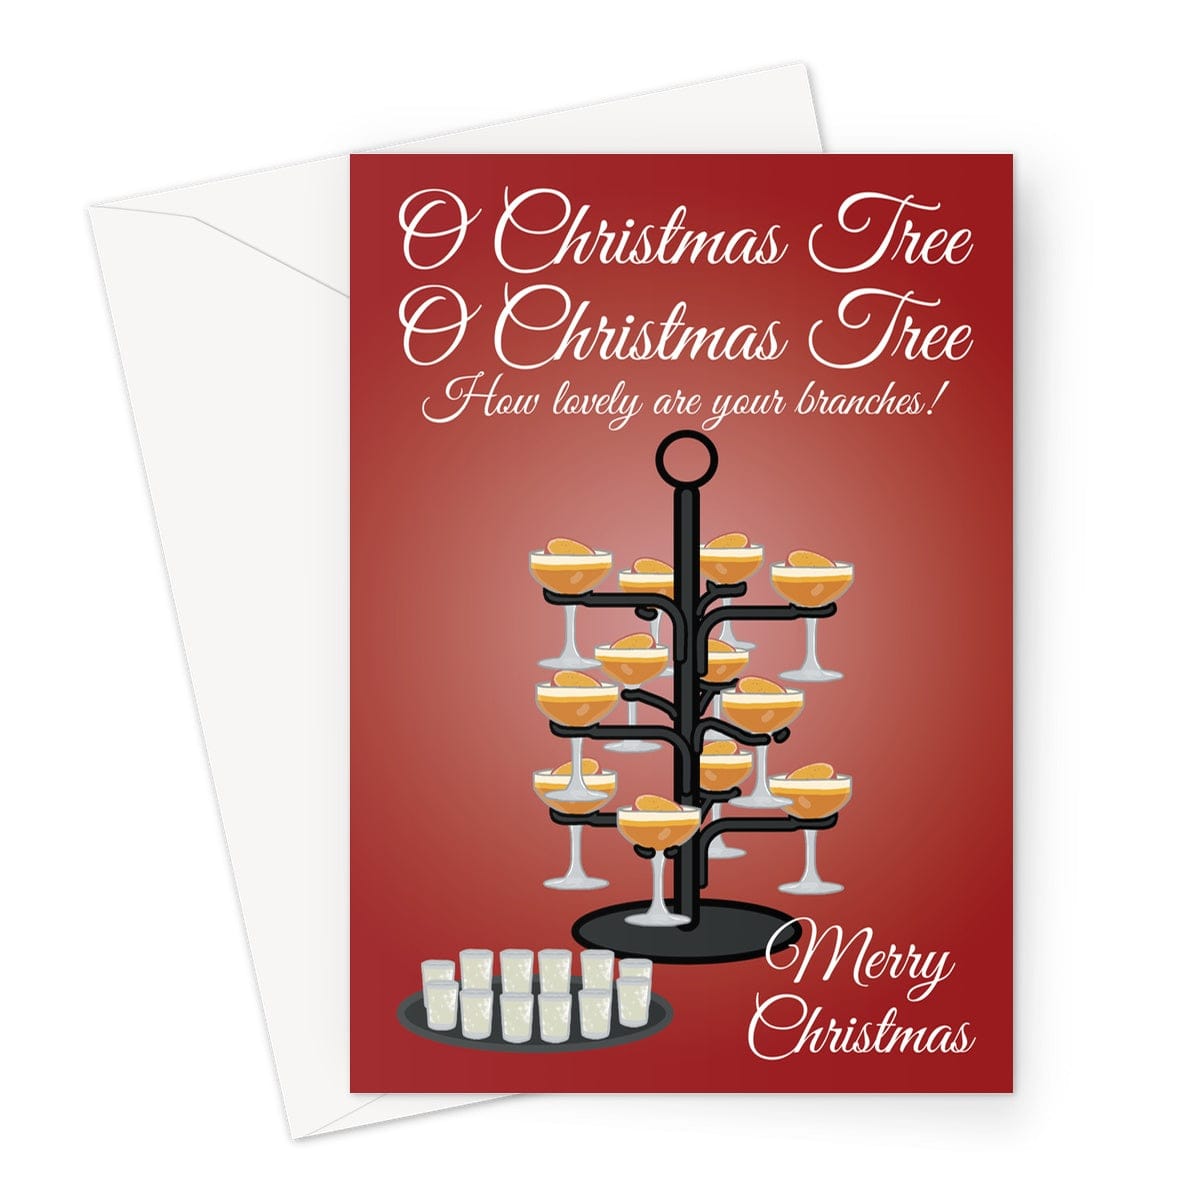 Merry Christmas Card Funny O Christmas Tree Porn Star Martini A5 G Cupsies Creations 